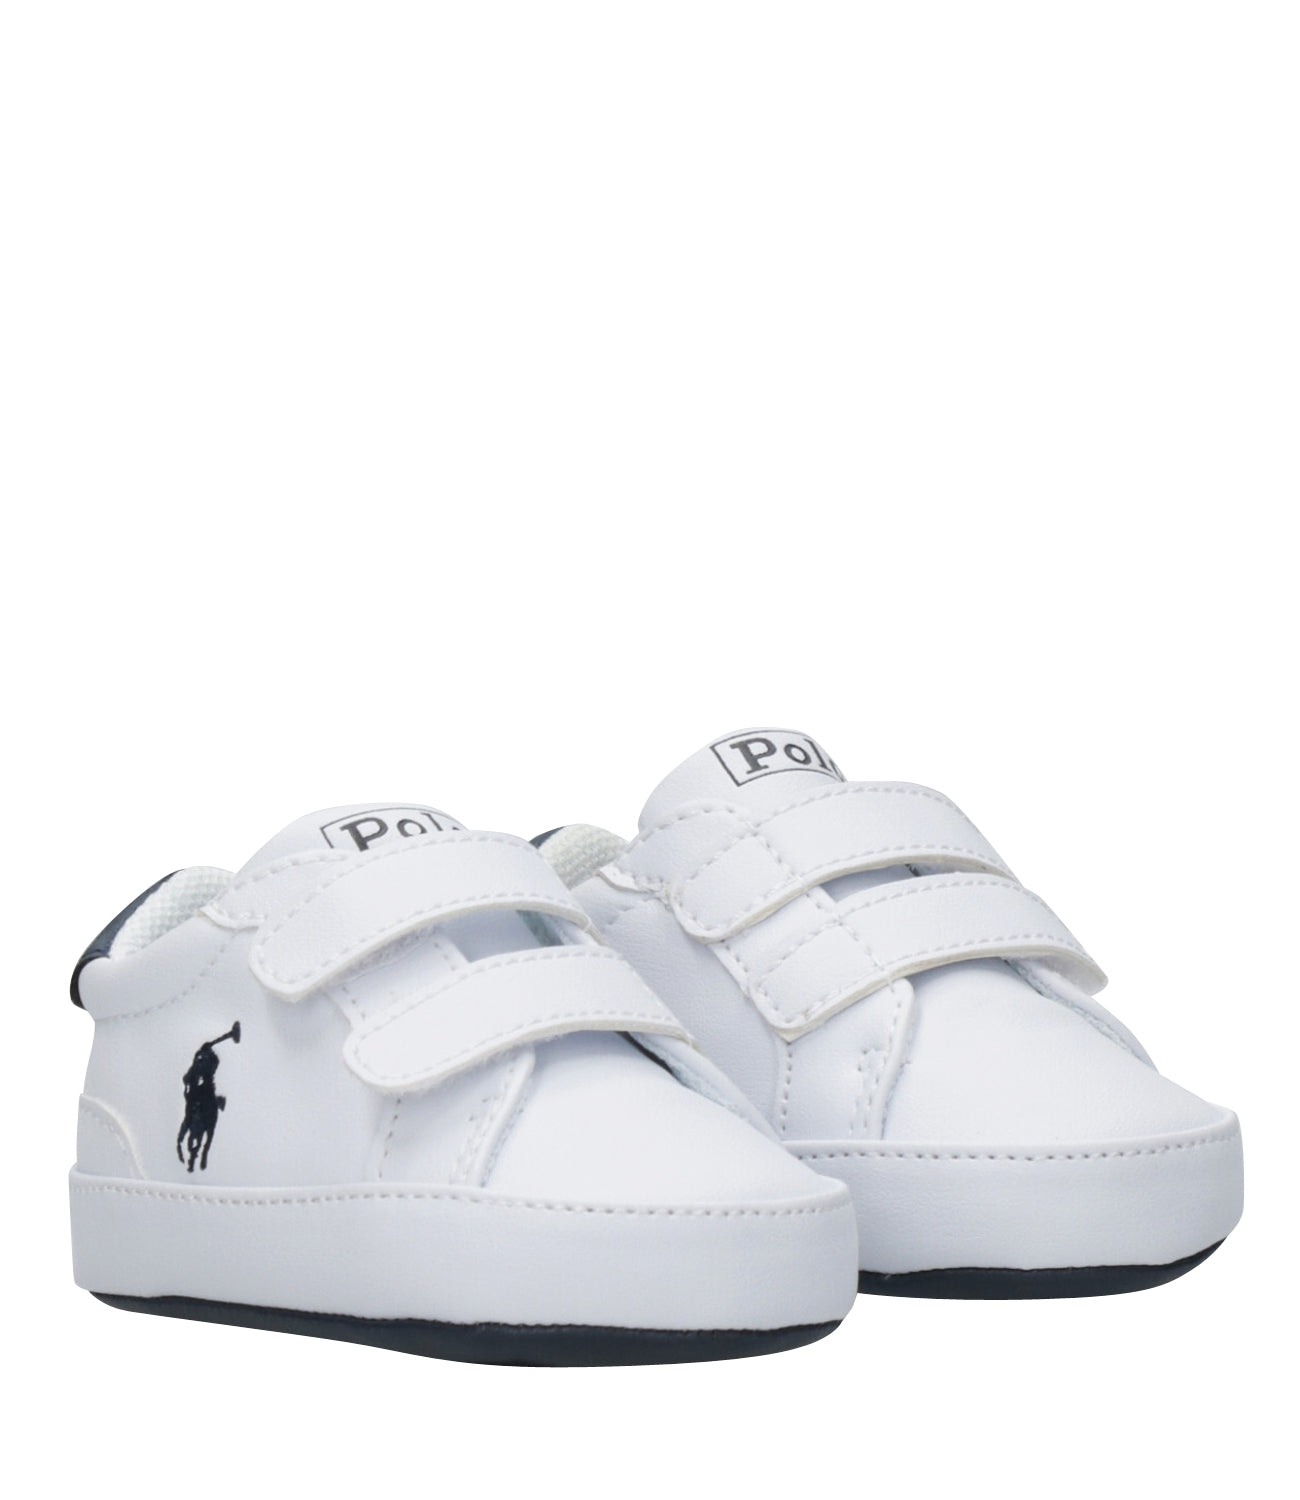 Ralph Lauren Childrenswear | Heritage Court II EZ Sneakers White and Navy Blue